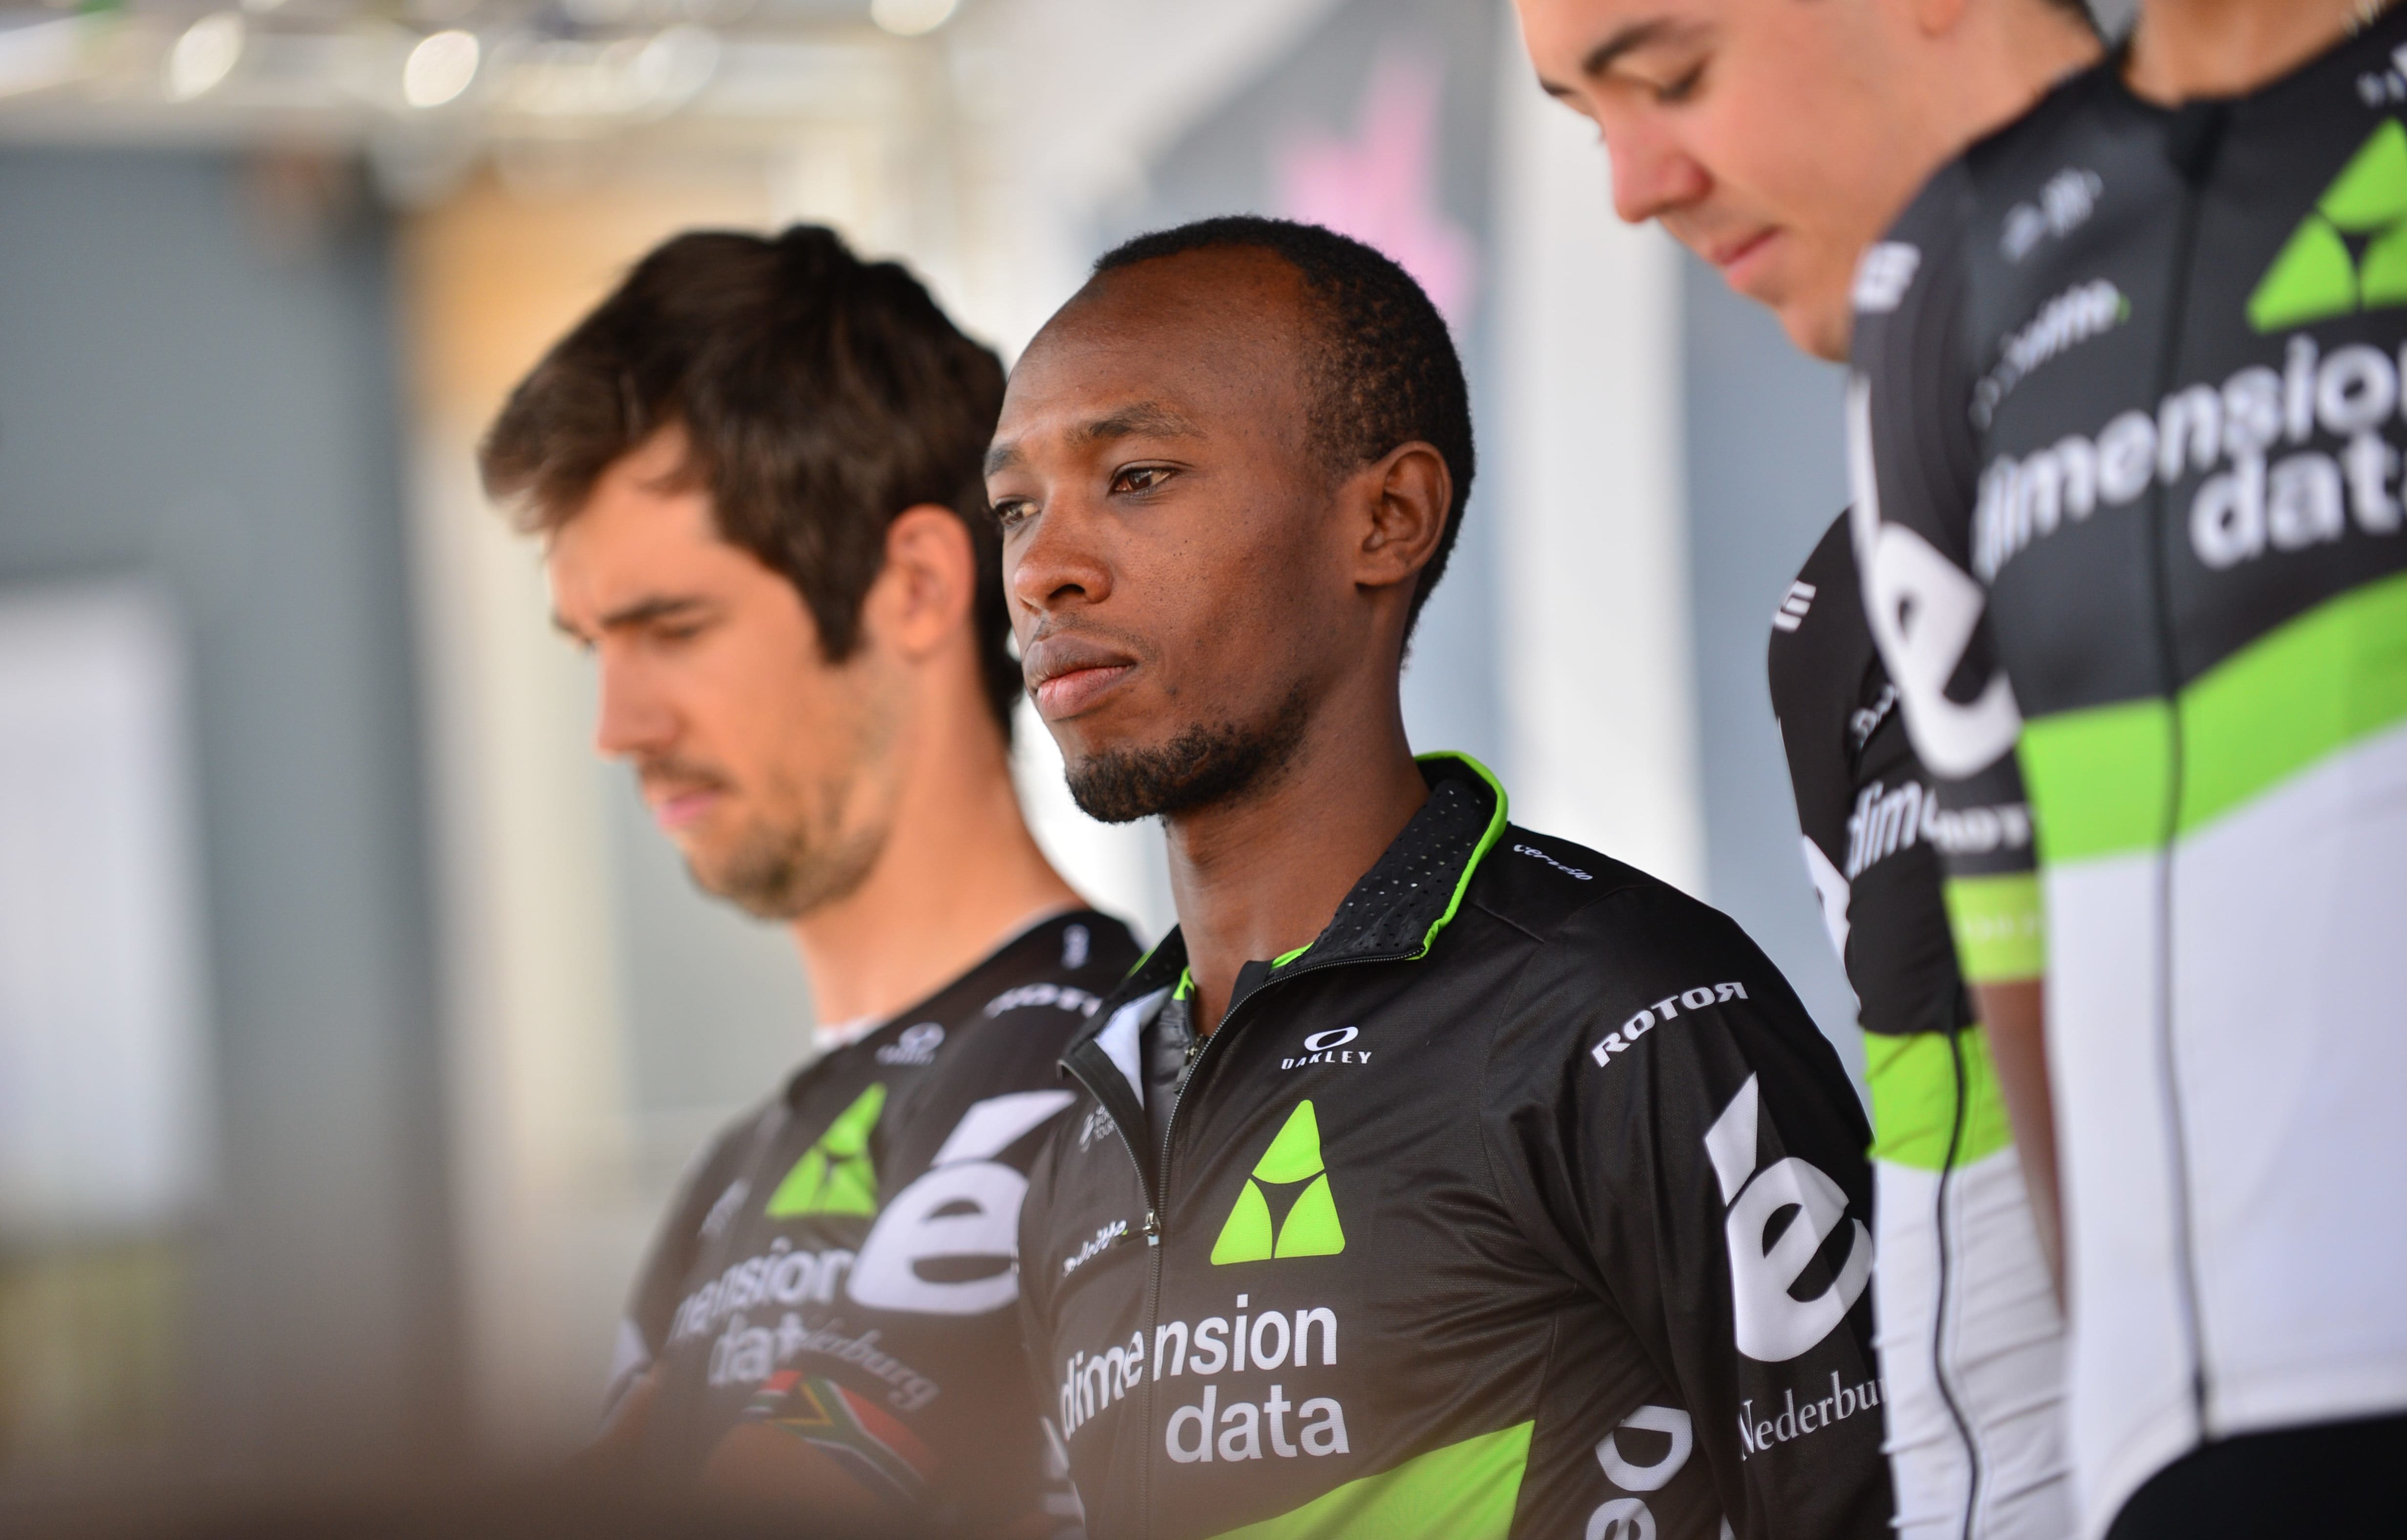 Adrien Niyonshuti represented Rwanda at the London 2012 Olympics in mountain bike and Rio 2016 Olympics in road race. / Net photo.